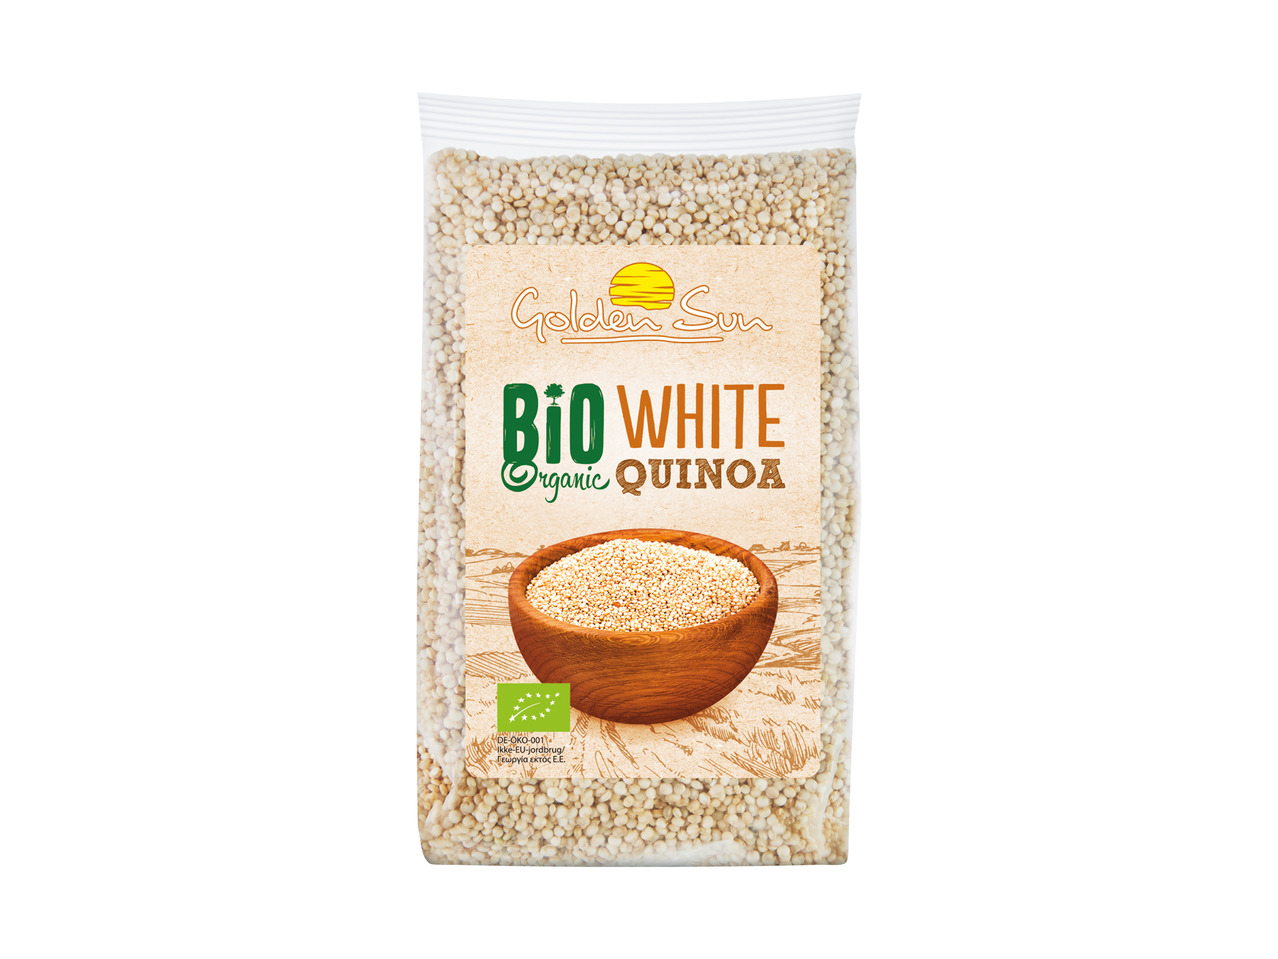 GOLDEN SUN Økologiske quinoa-/chiafrø